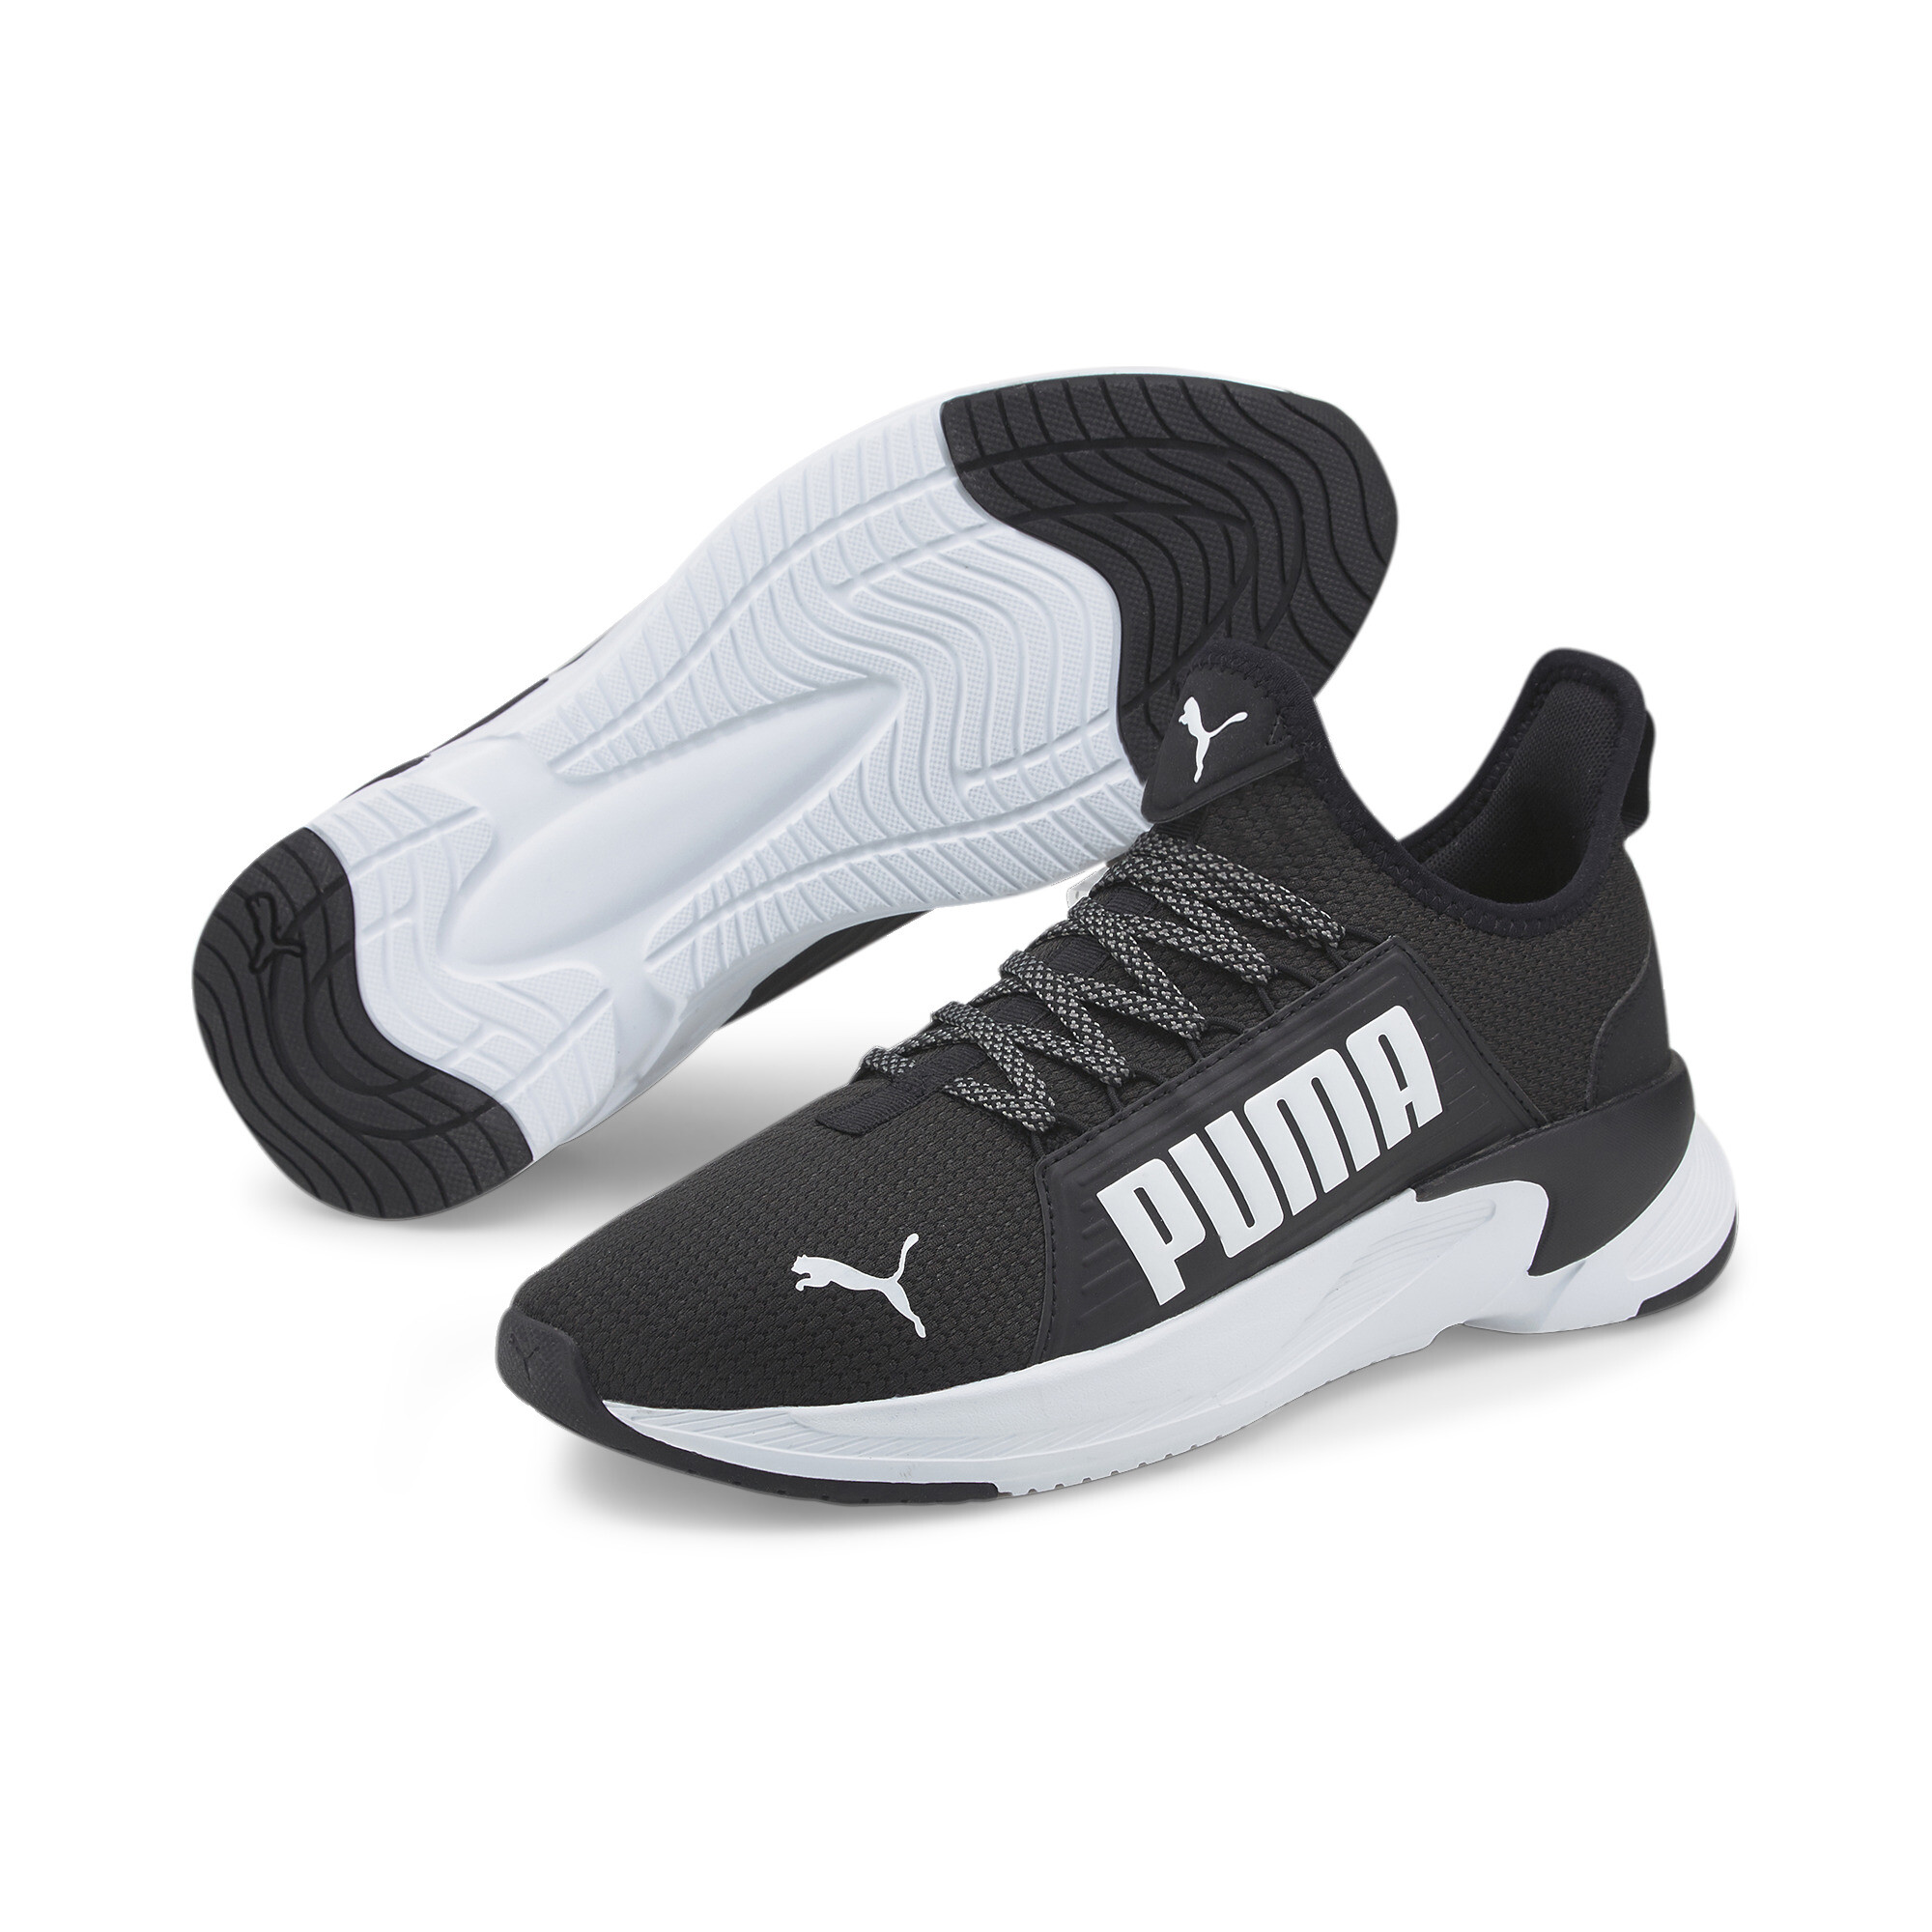 Men's PUMA Softride Premier Slip-On Running Shoes In Black, Size EU 40